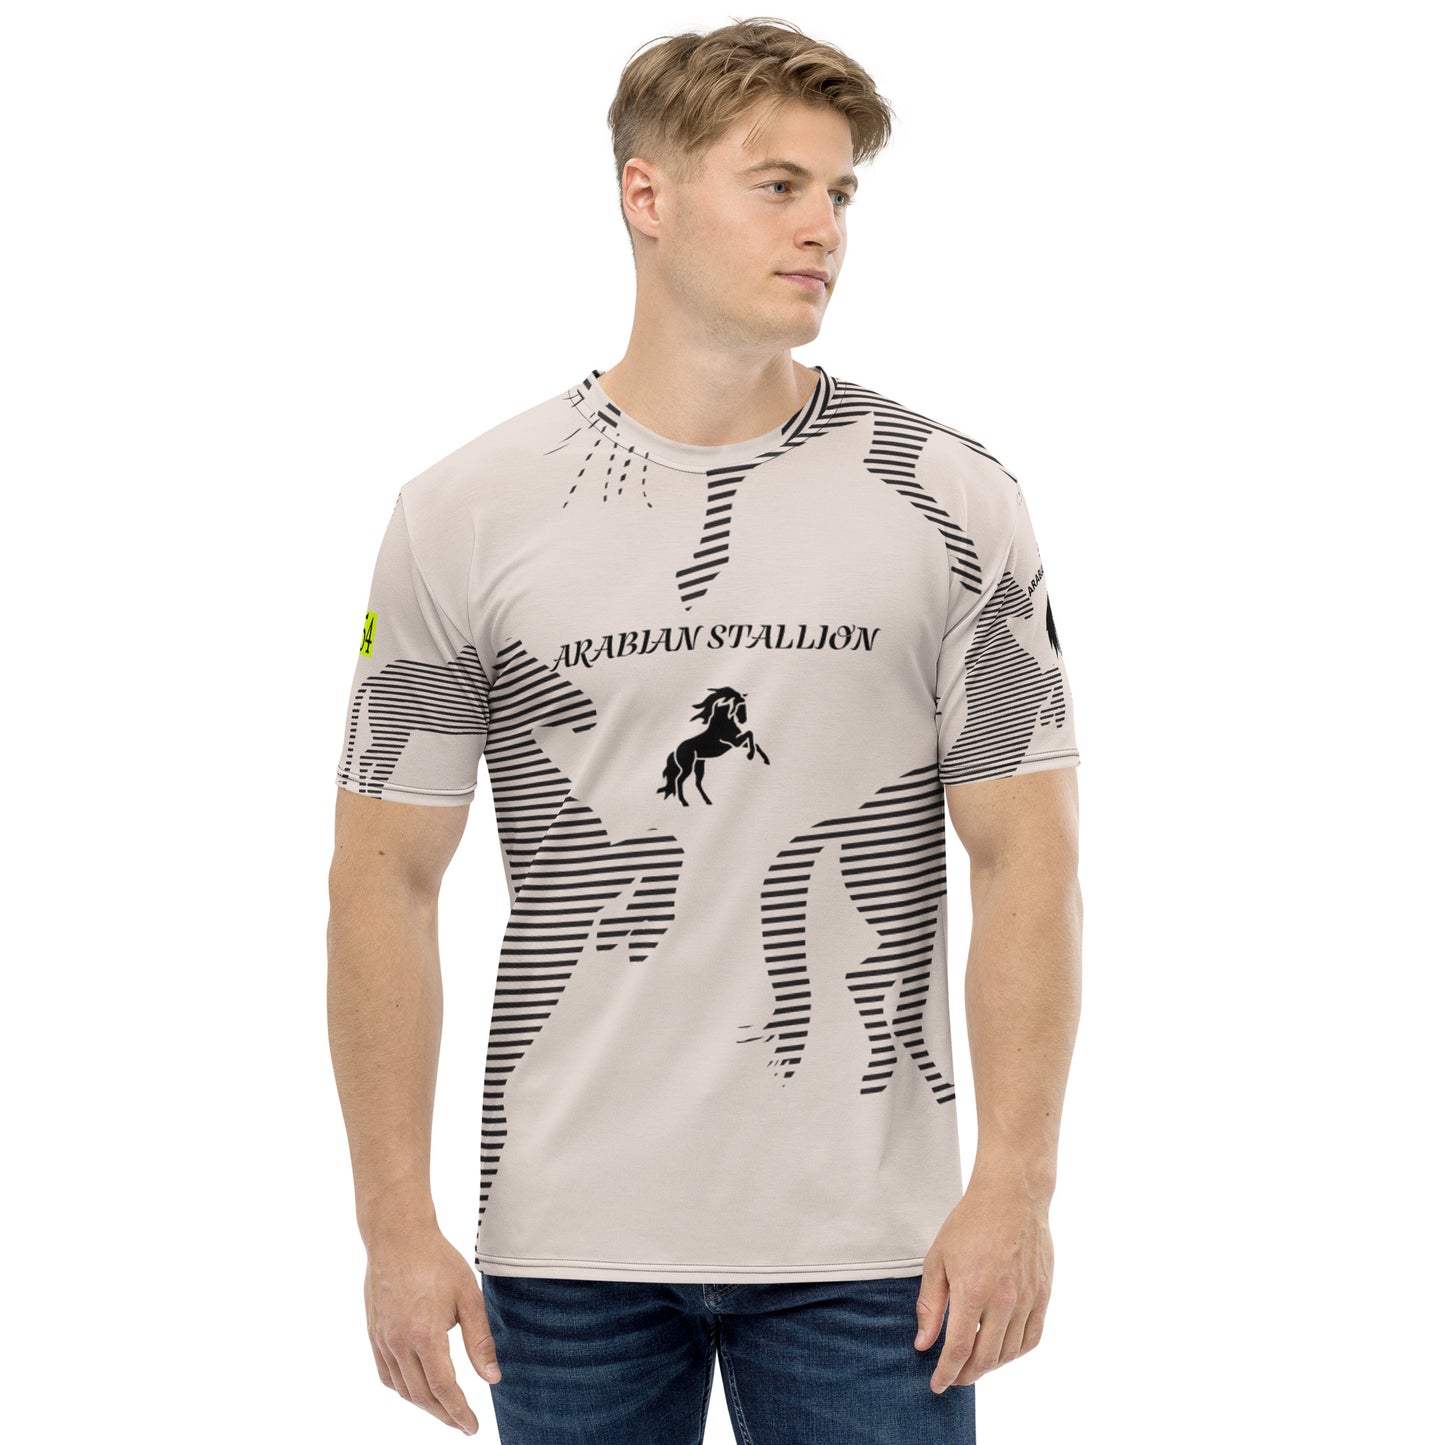 Arabian Stallion Classic t-shirt